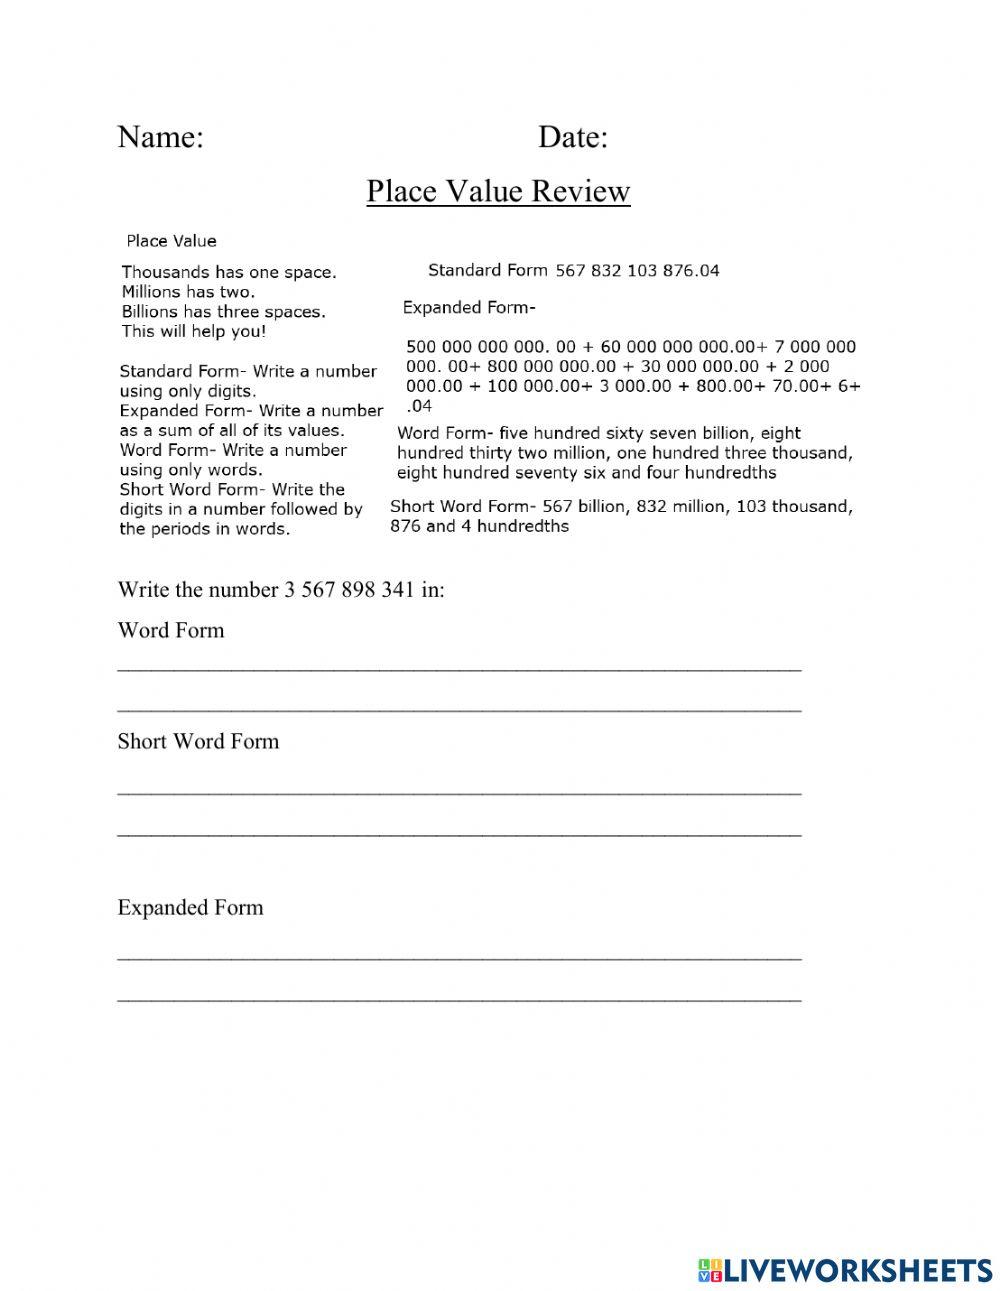 Place Value Review